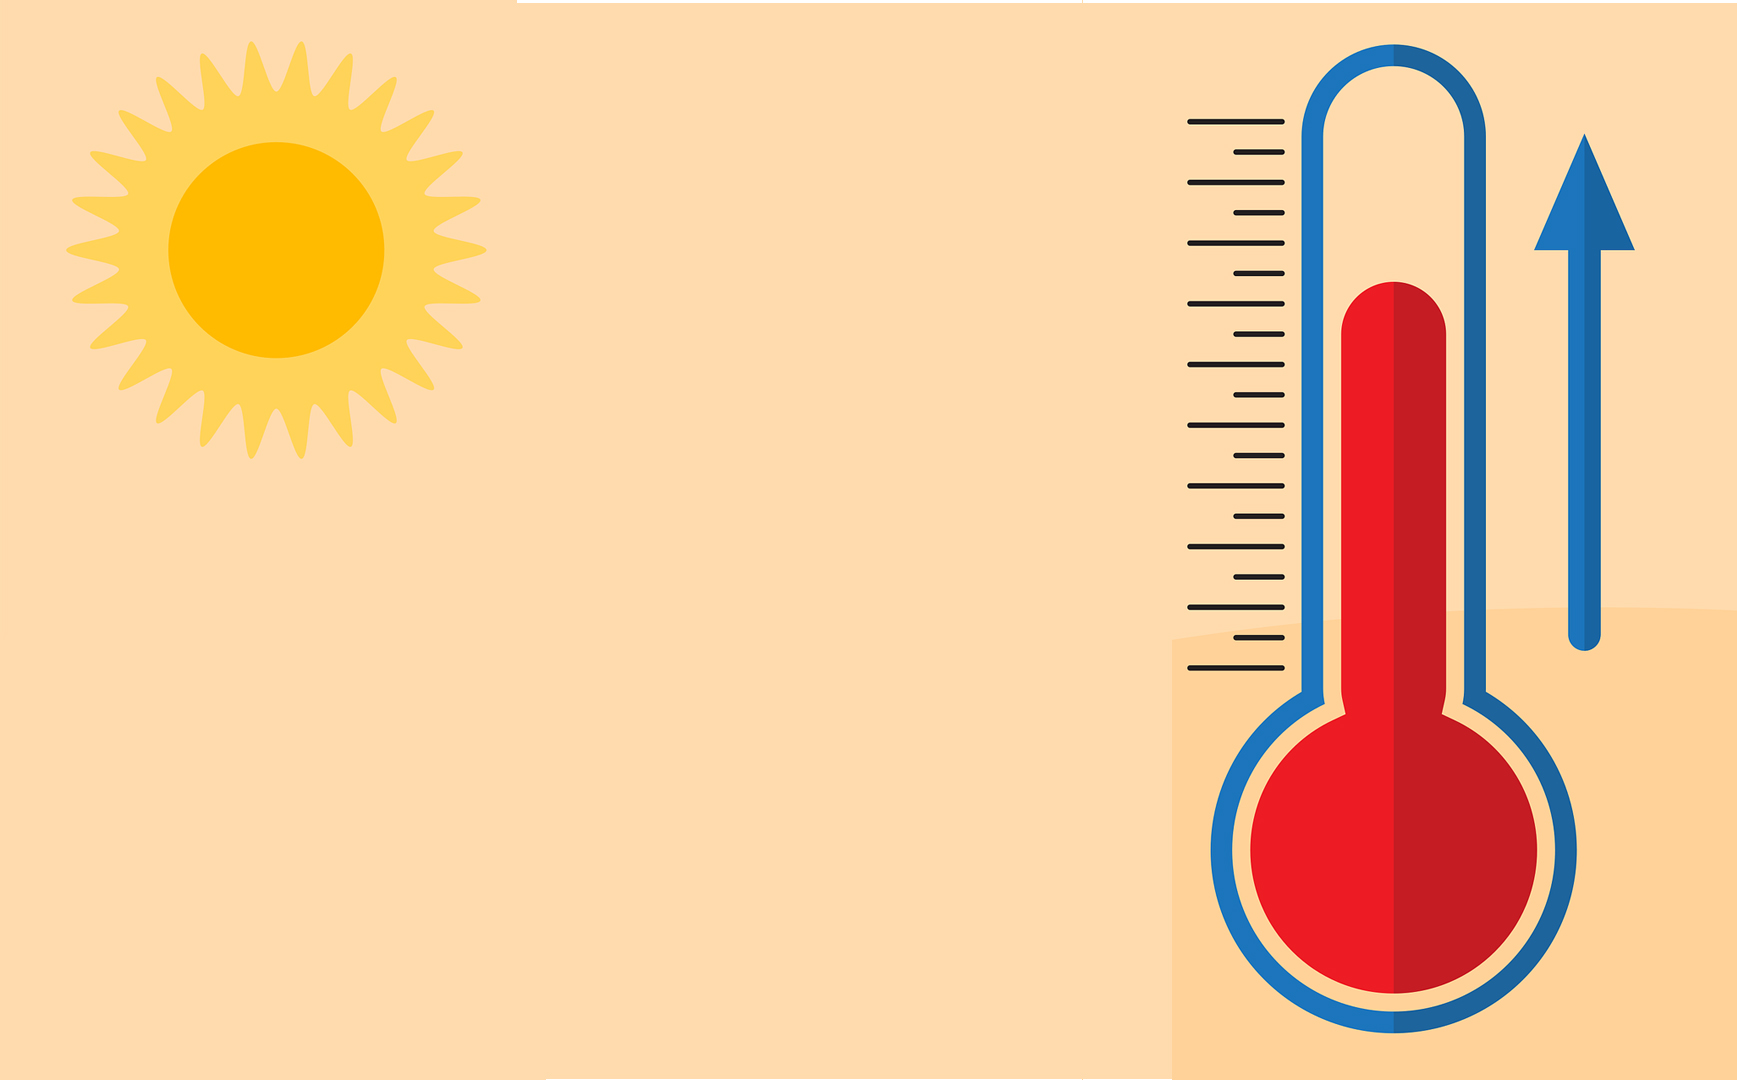 extreme heat - rising temperature - summer
heat wave